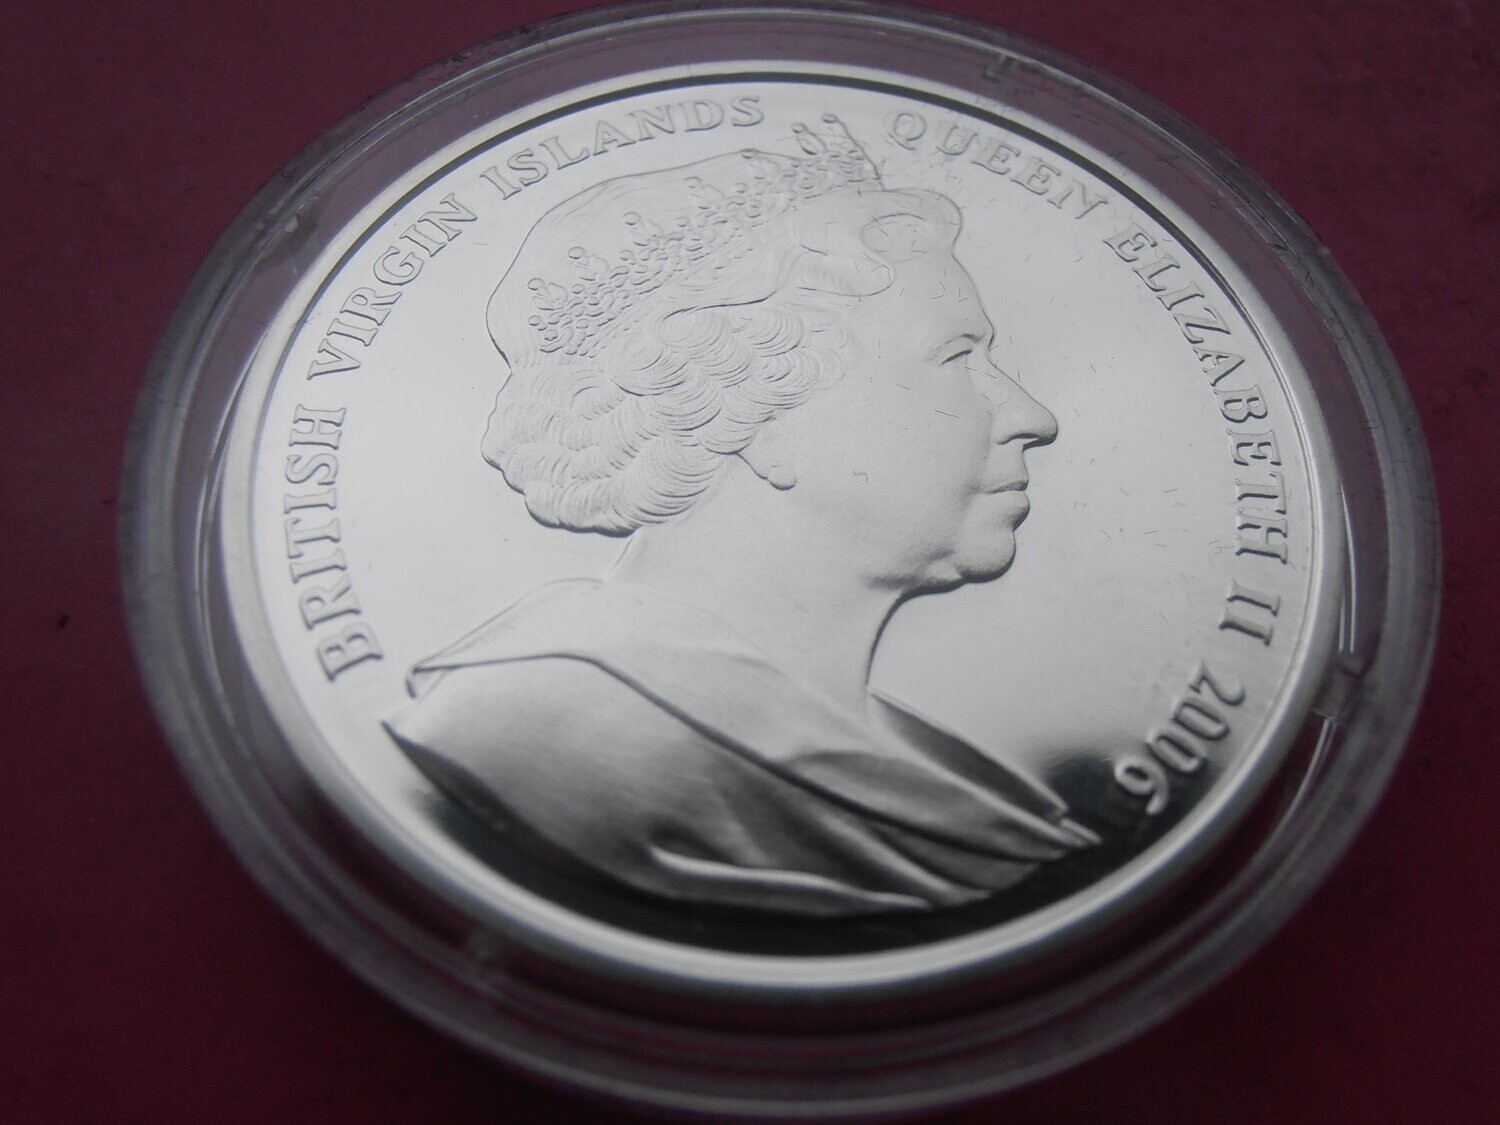 British Virgin Islands Silver Proof $10 - 2006 (Returning as Queen)